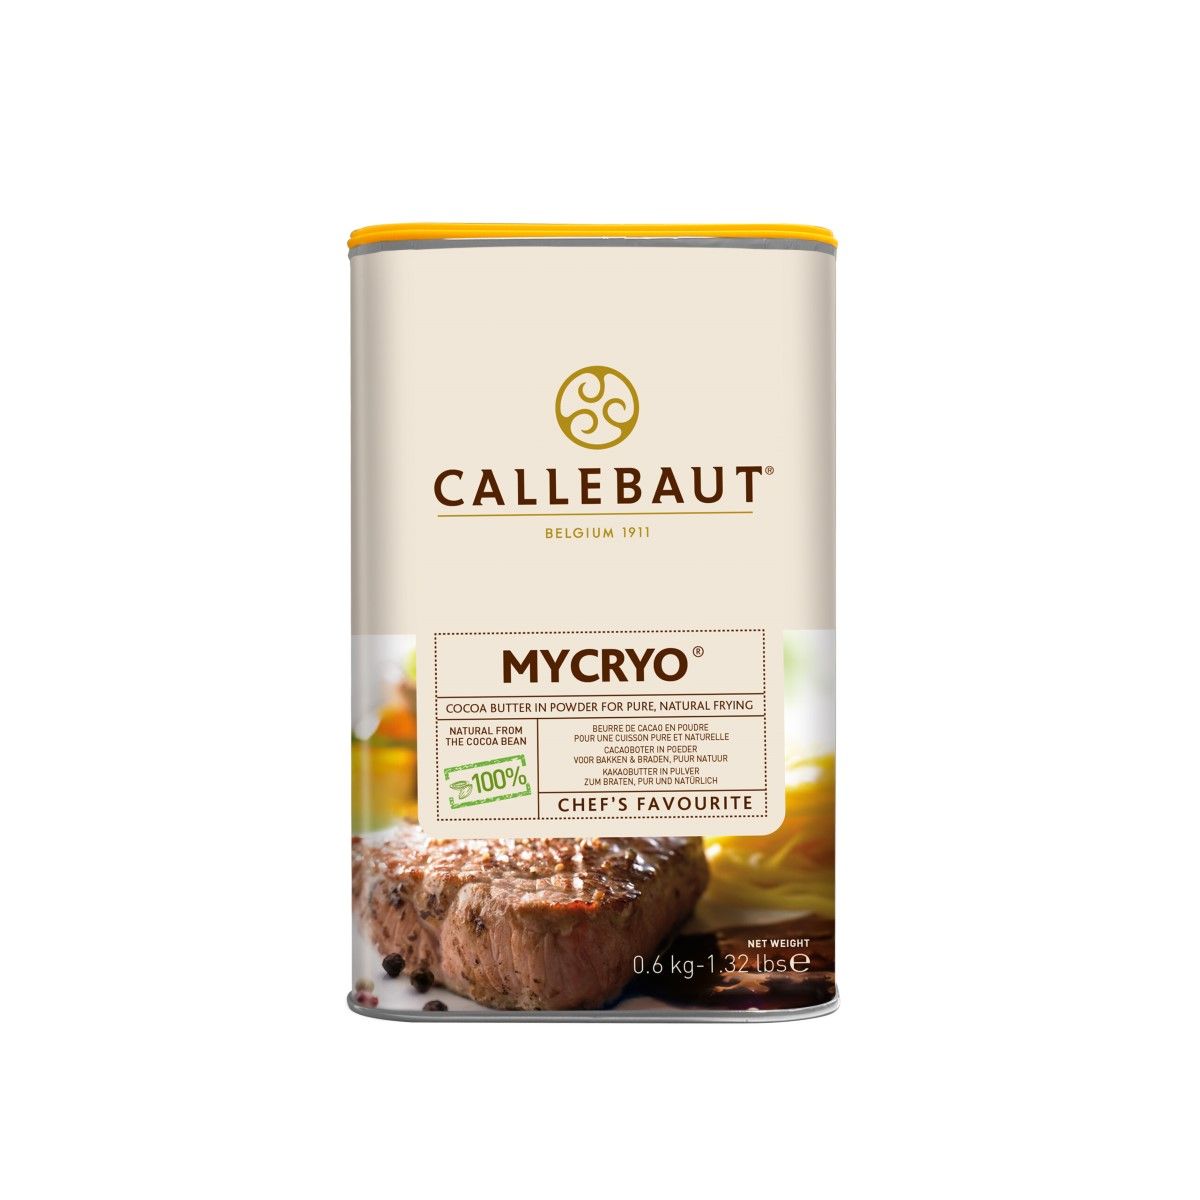 Callebaut Mycryo ™ 600g